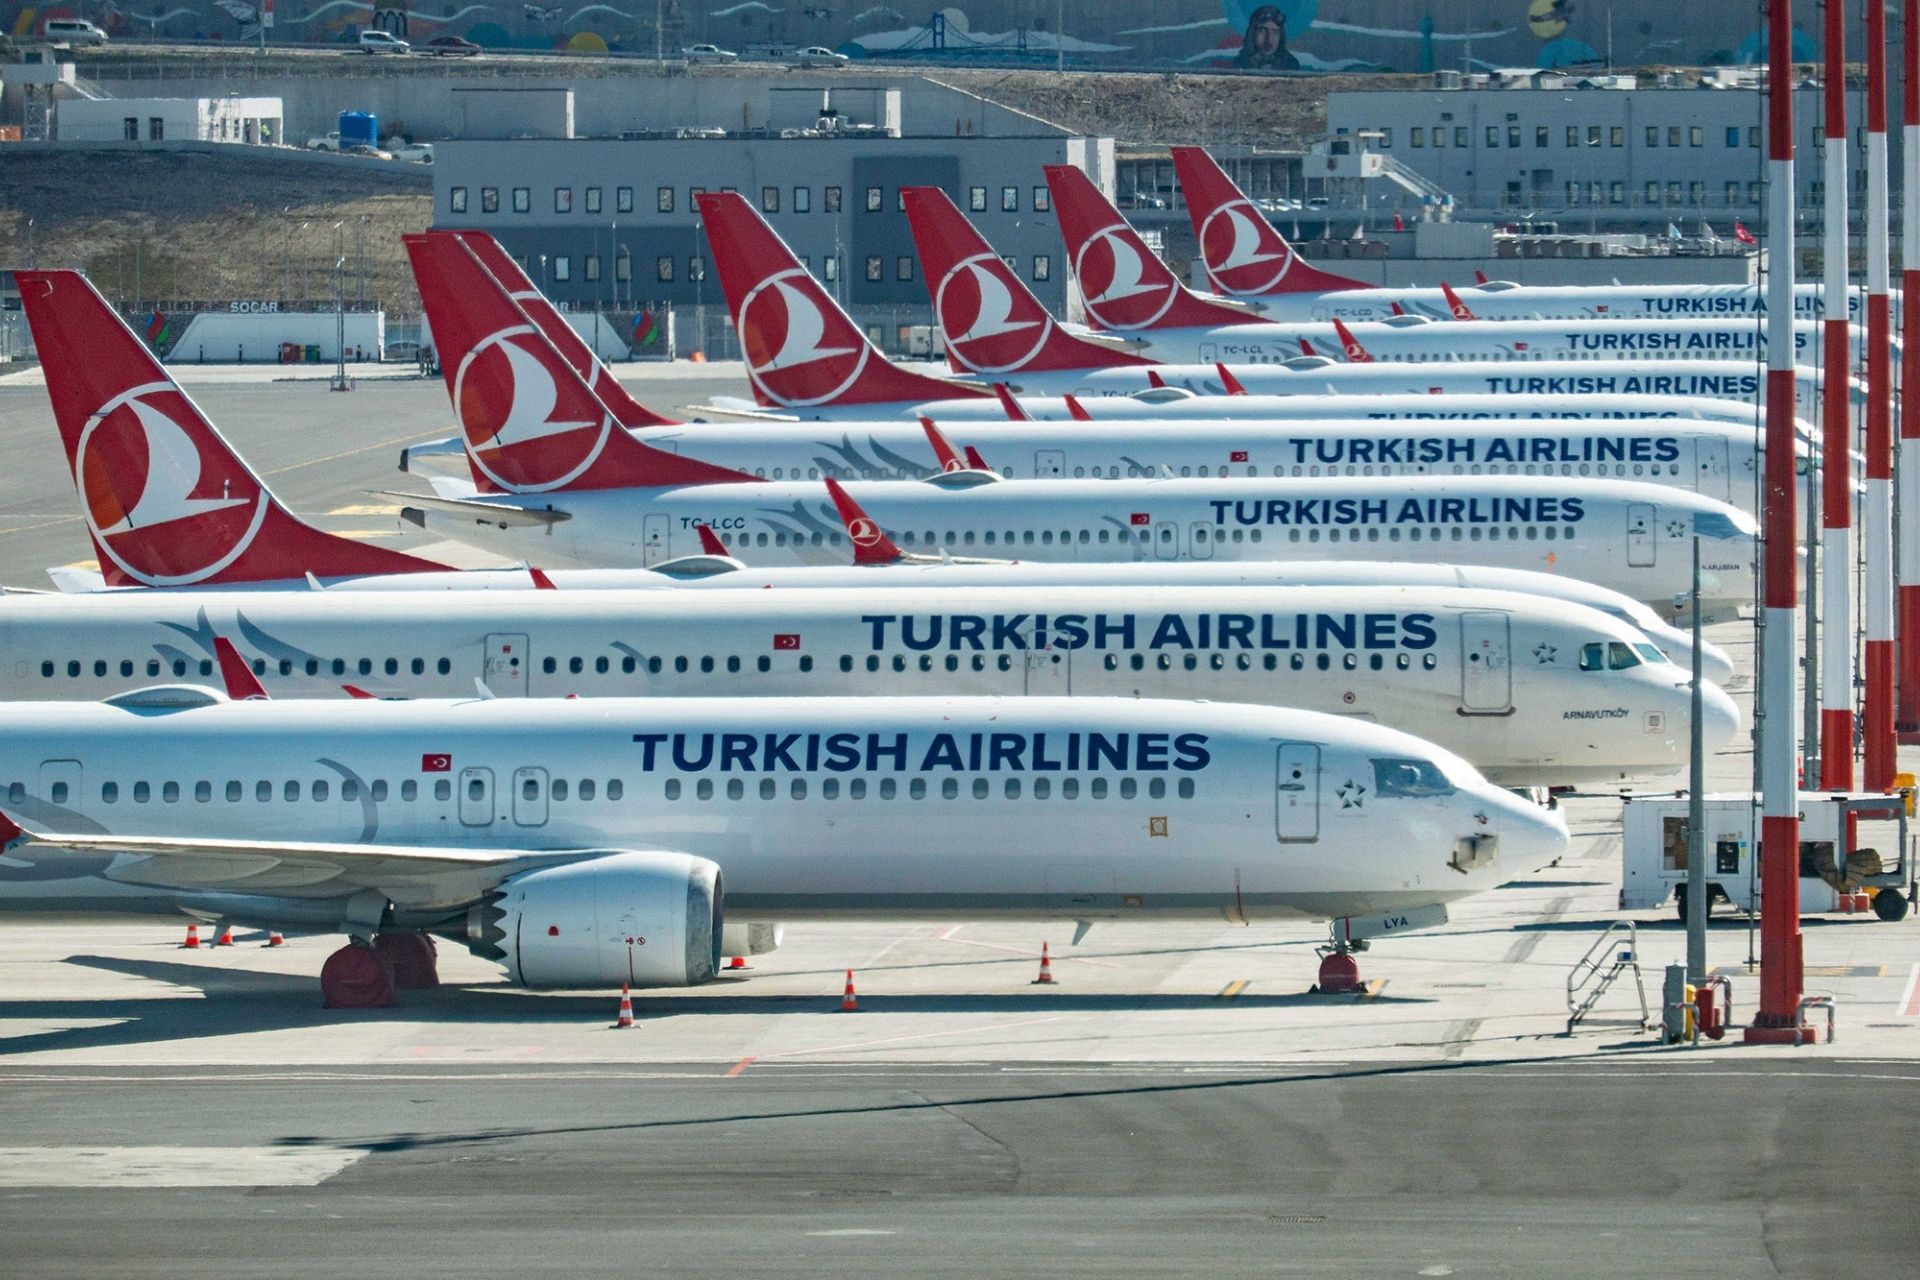 Turkish Airlines planes